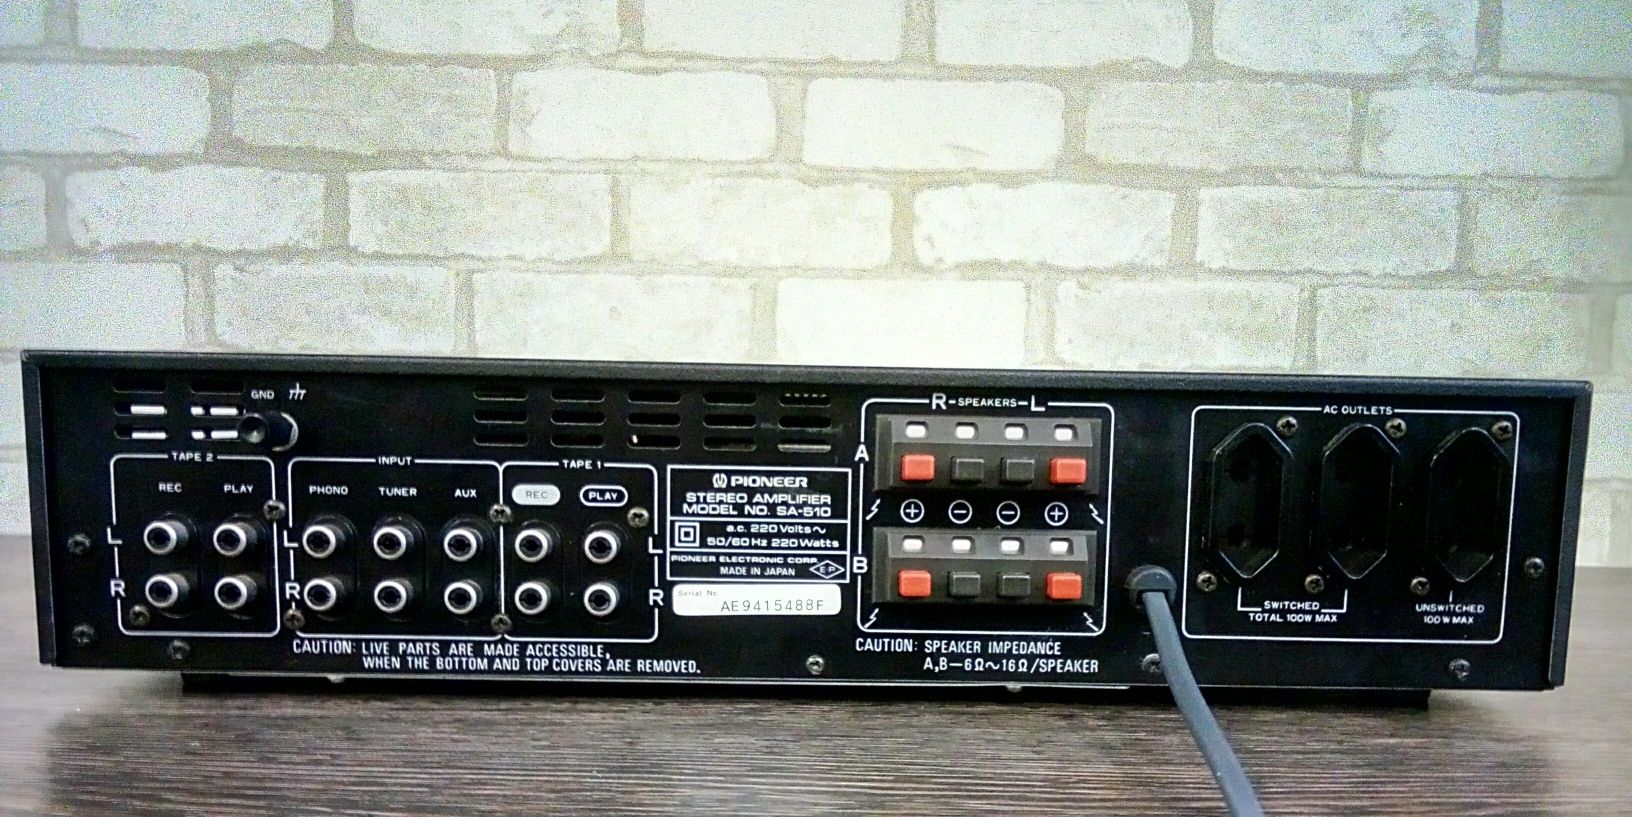 Pioneer SA-510 Stereo Amplifier 1980